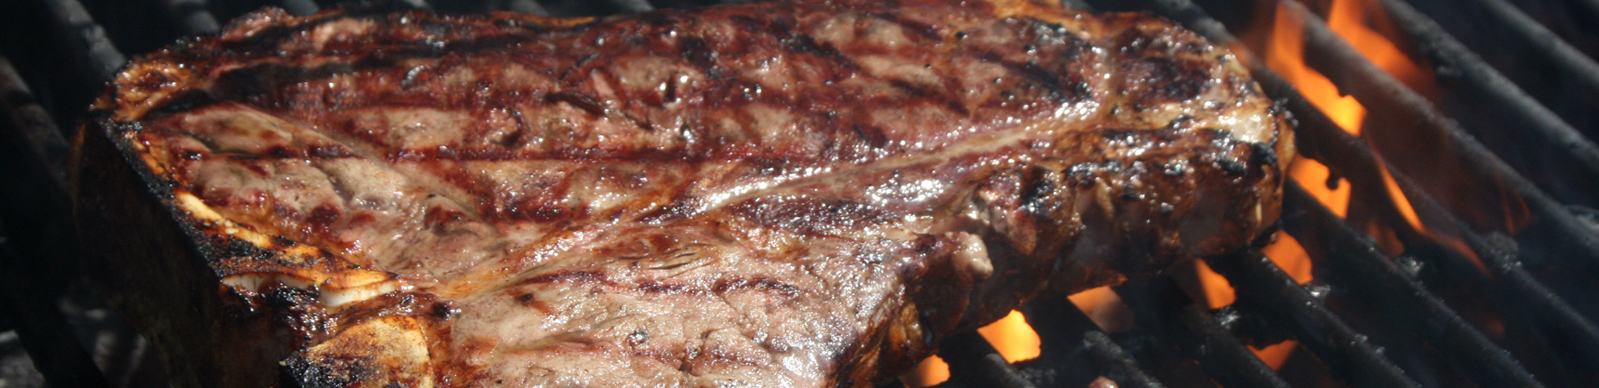 t-bone steak on the grill